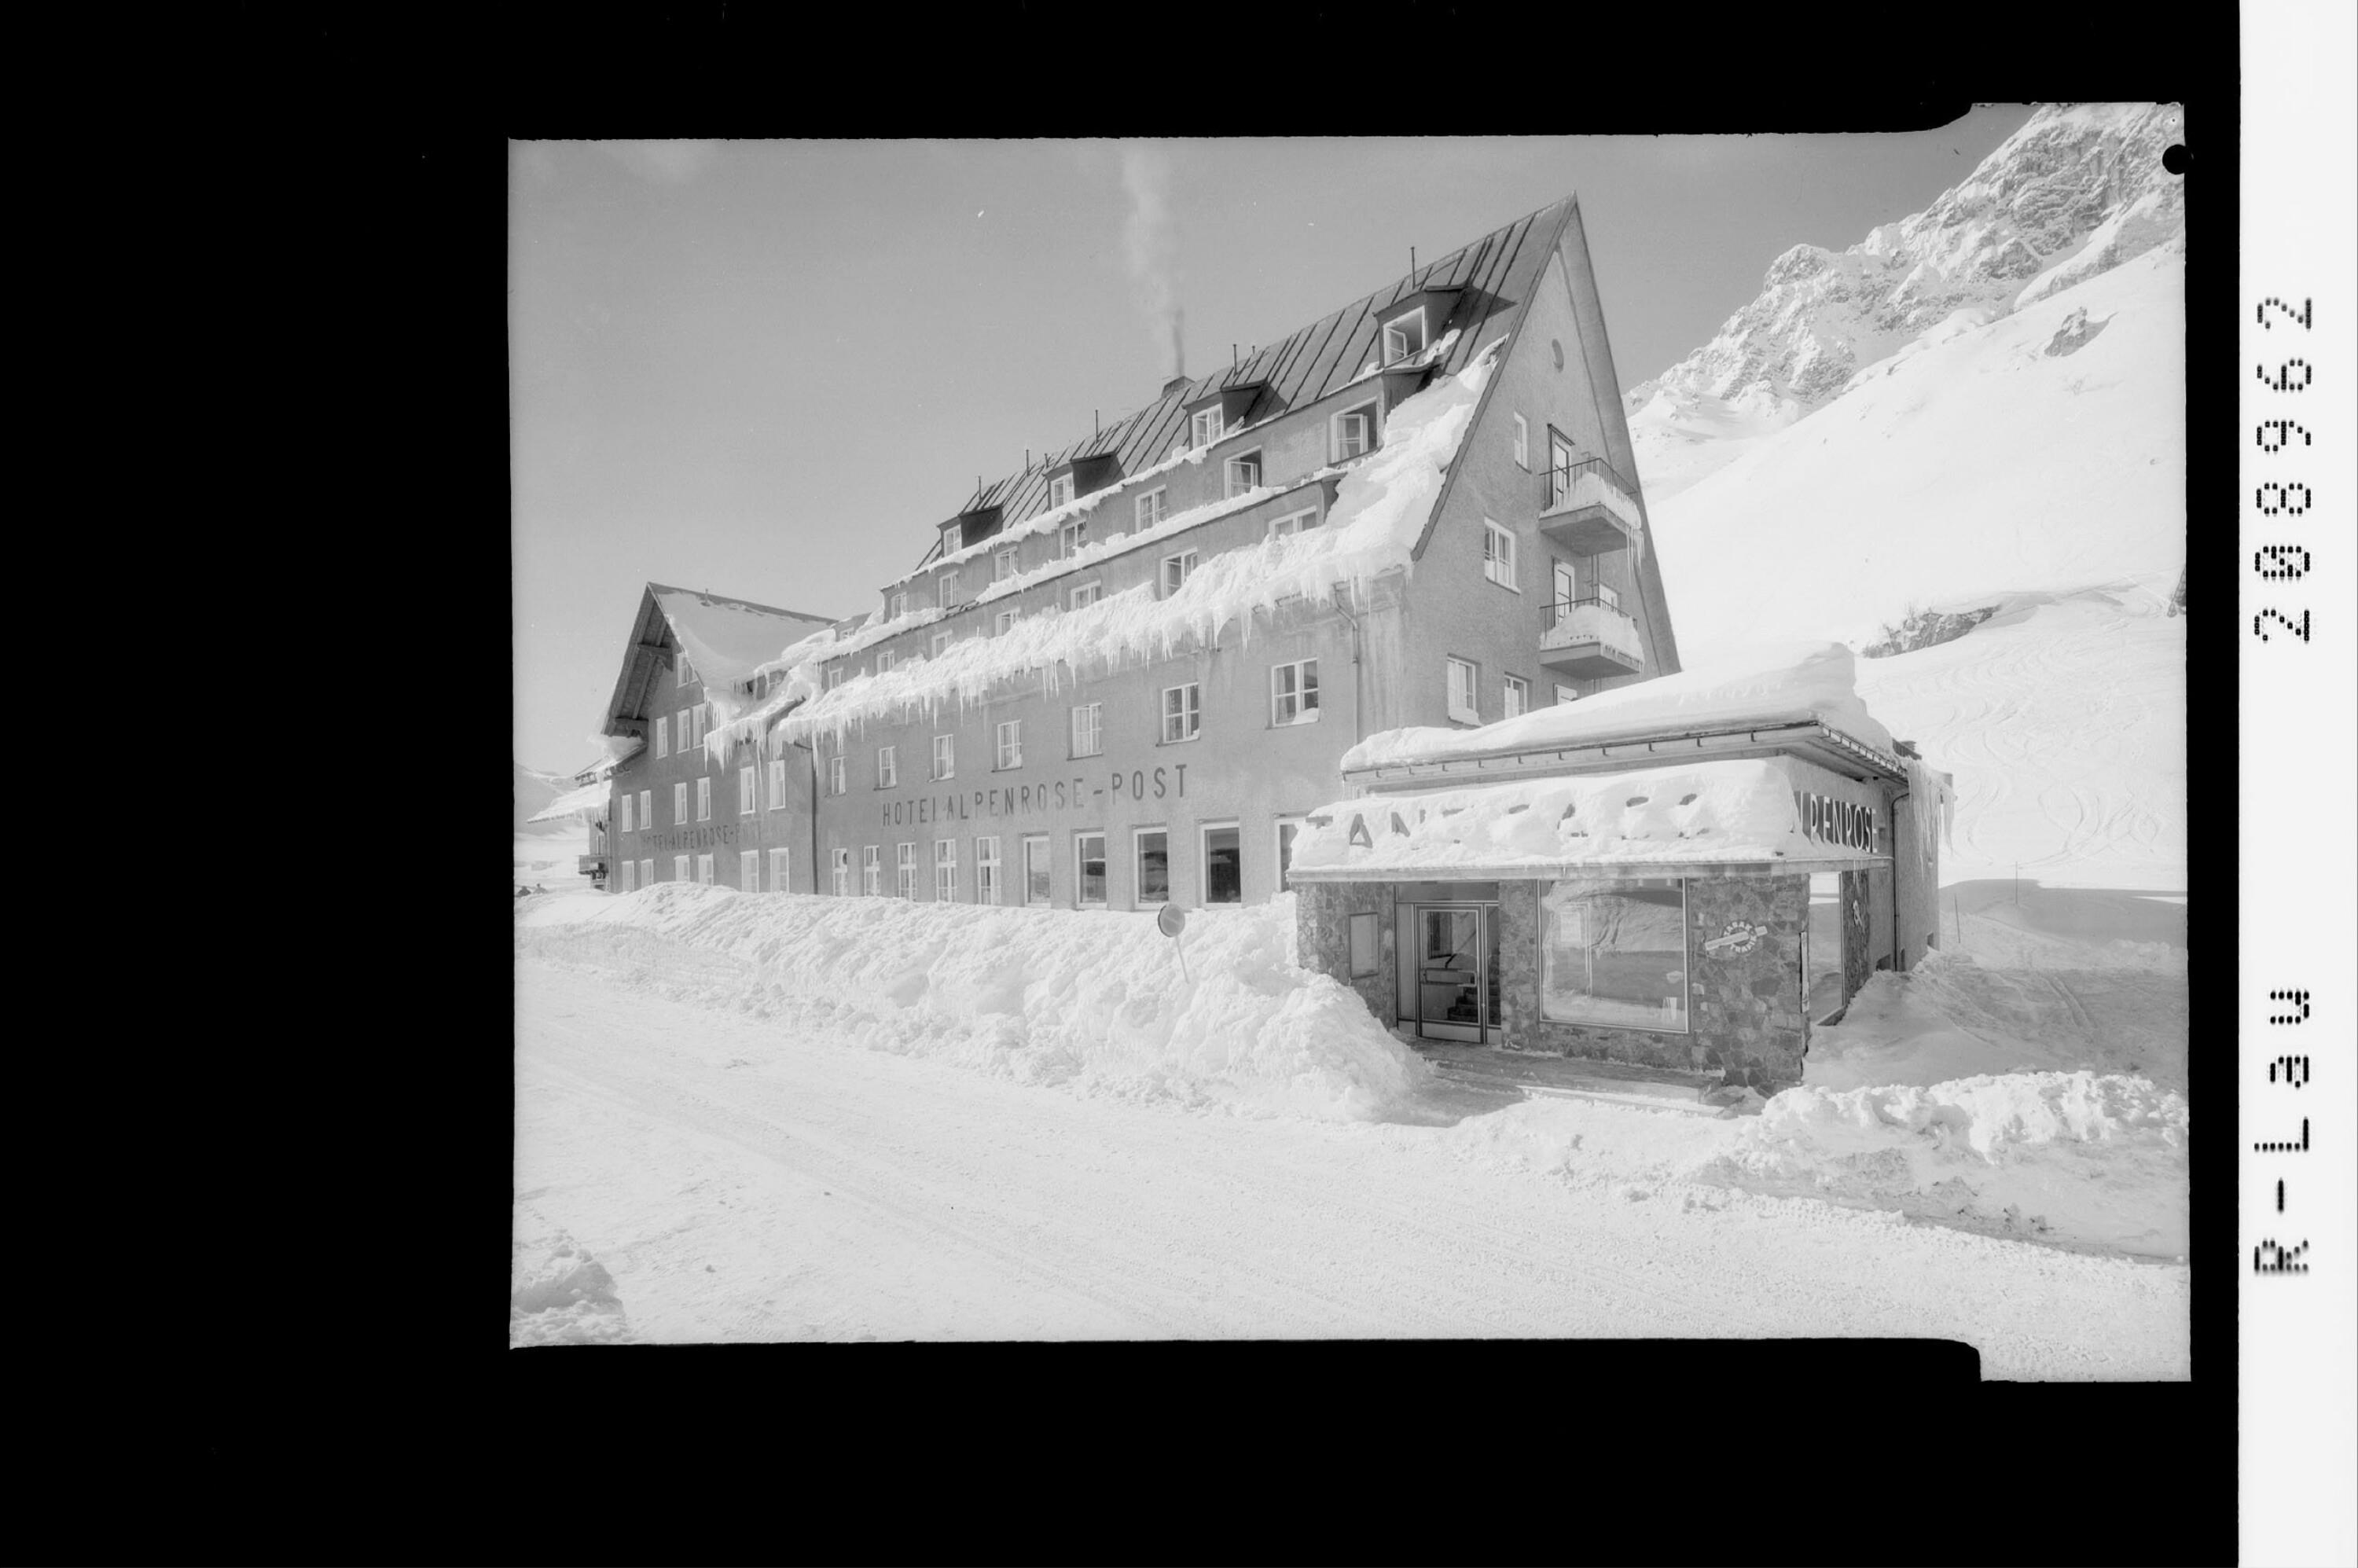 Zürs am Arlberg 1720 m, Hotel Alpenrose-Post></div>


    <hr>
    <div class=